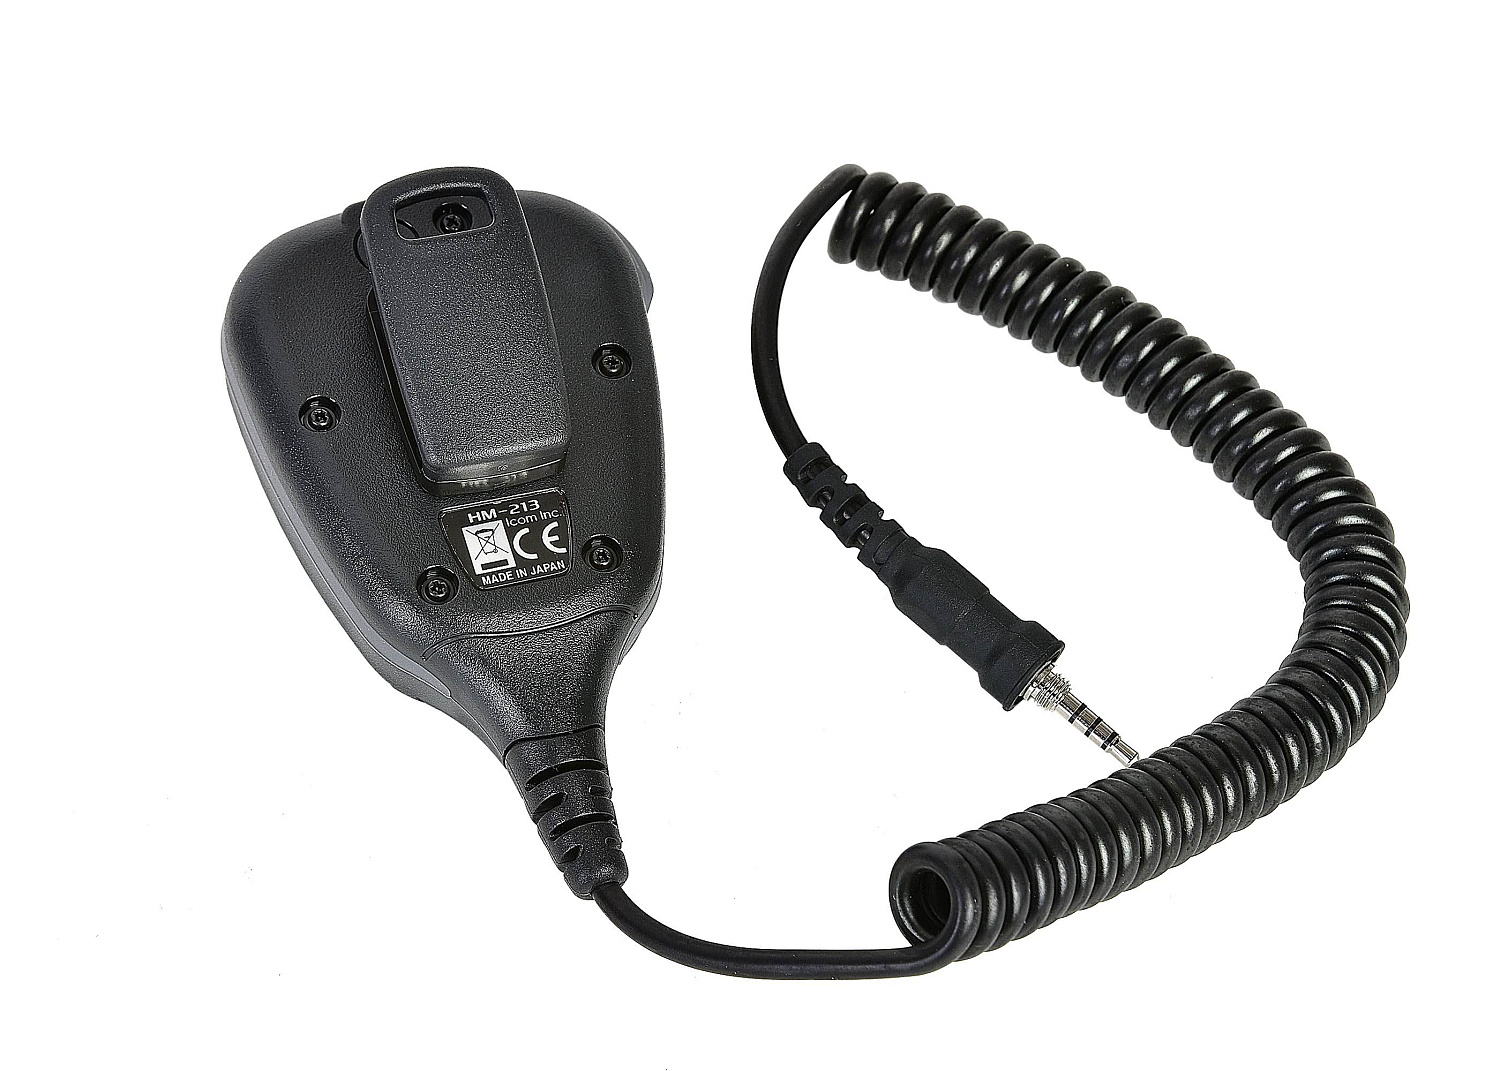 ICOM HM-213 Speaker Microphone